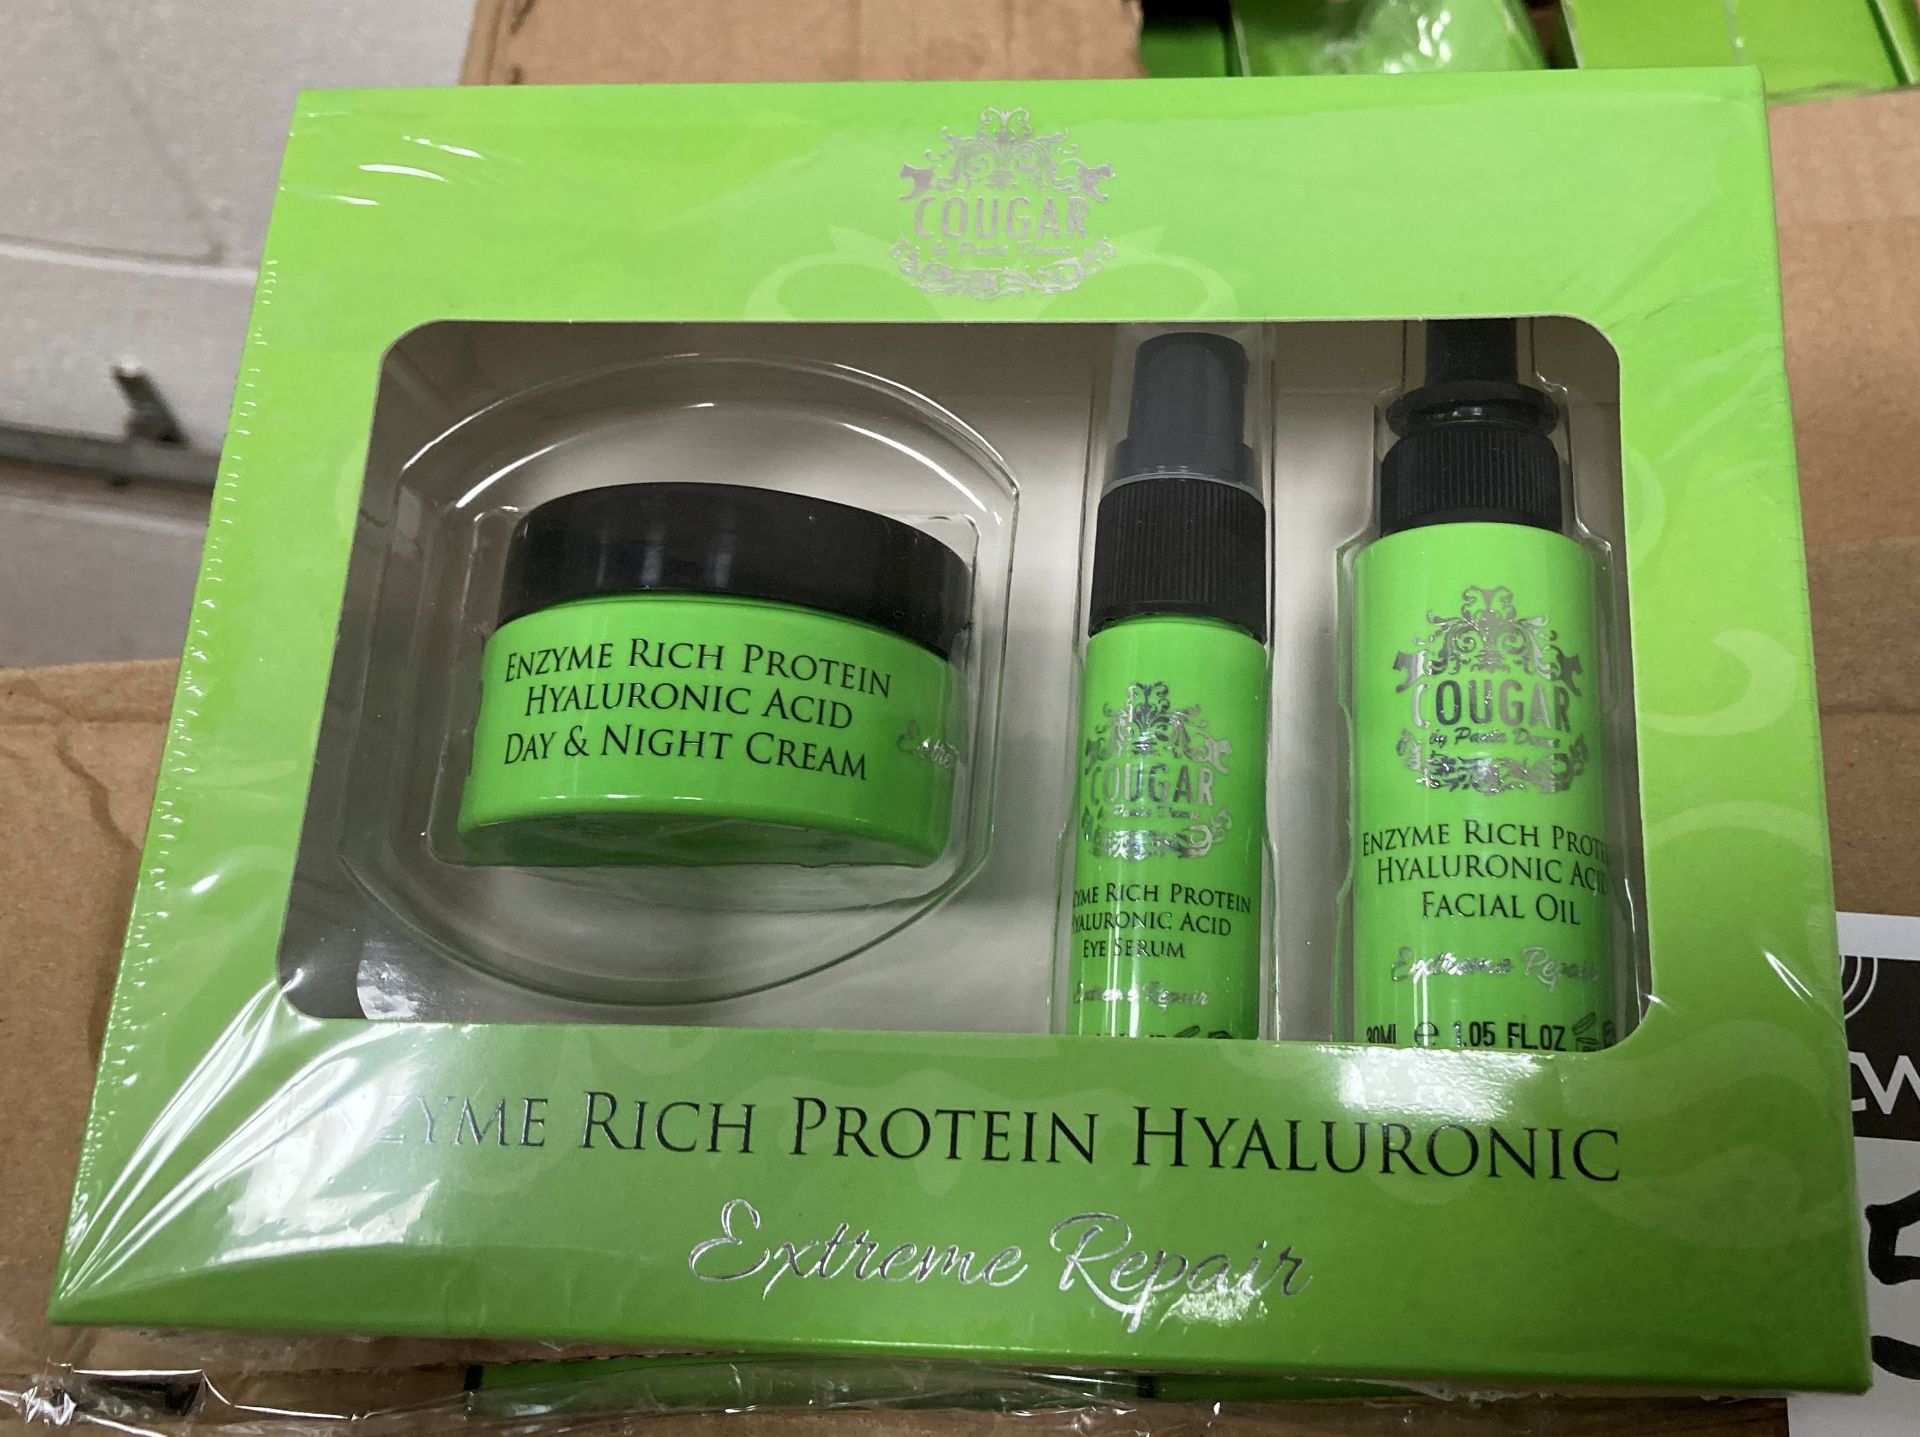 1 x box of Cougar Enzyme Rich Protein trio set (6 units per box)